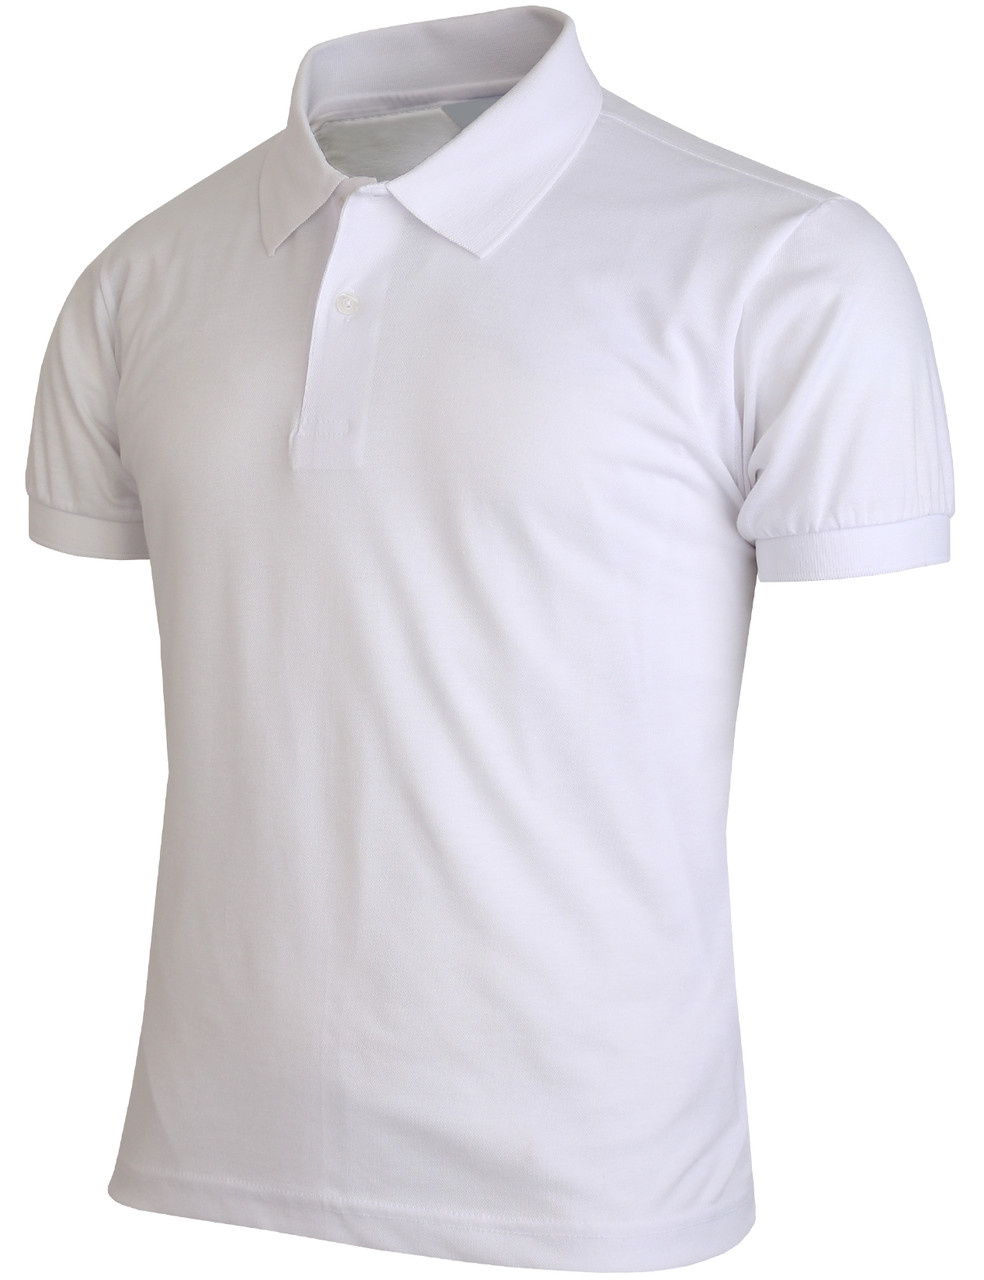 Buy Online White Pique Classic Polo T-Shirt for Men Online at Zobello